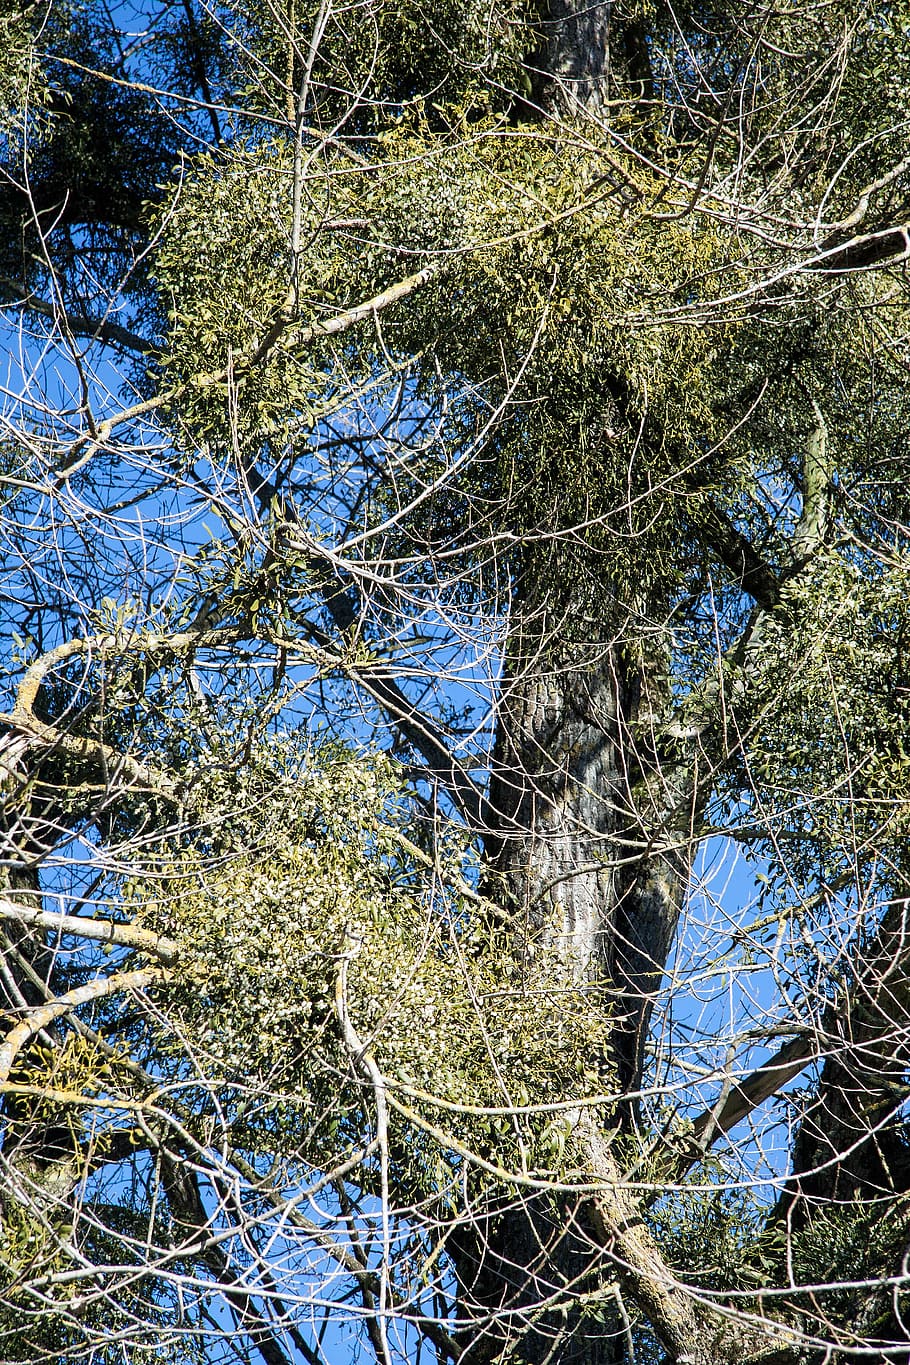 Poplar, Tree Mistletoe, nature conservation, parasite, medicinal plant